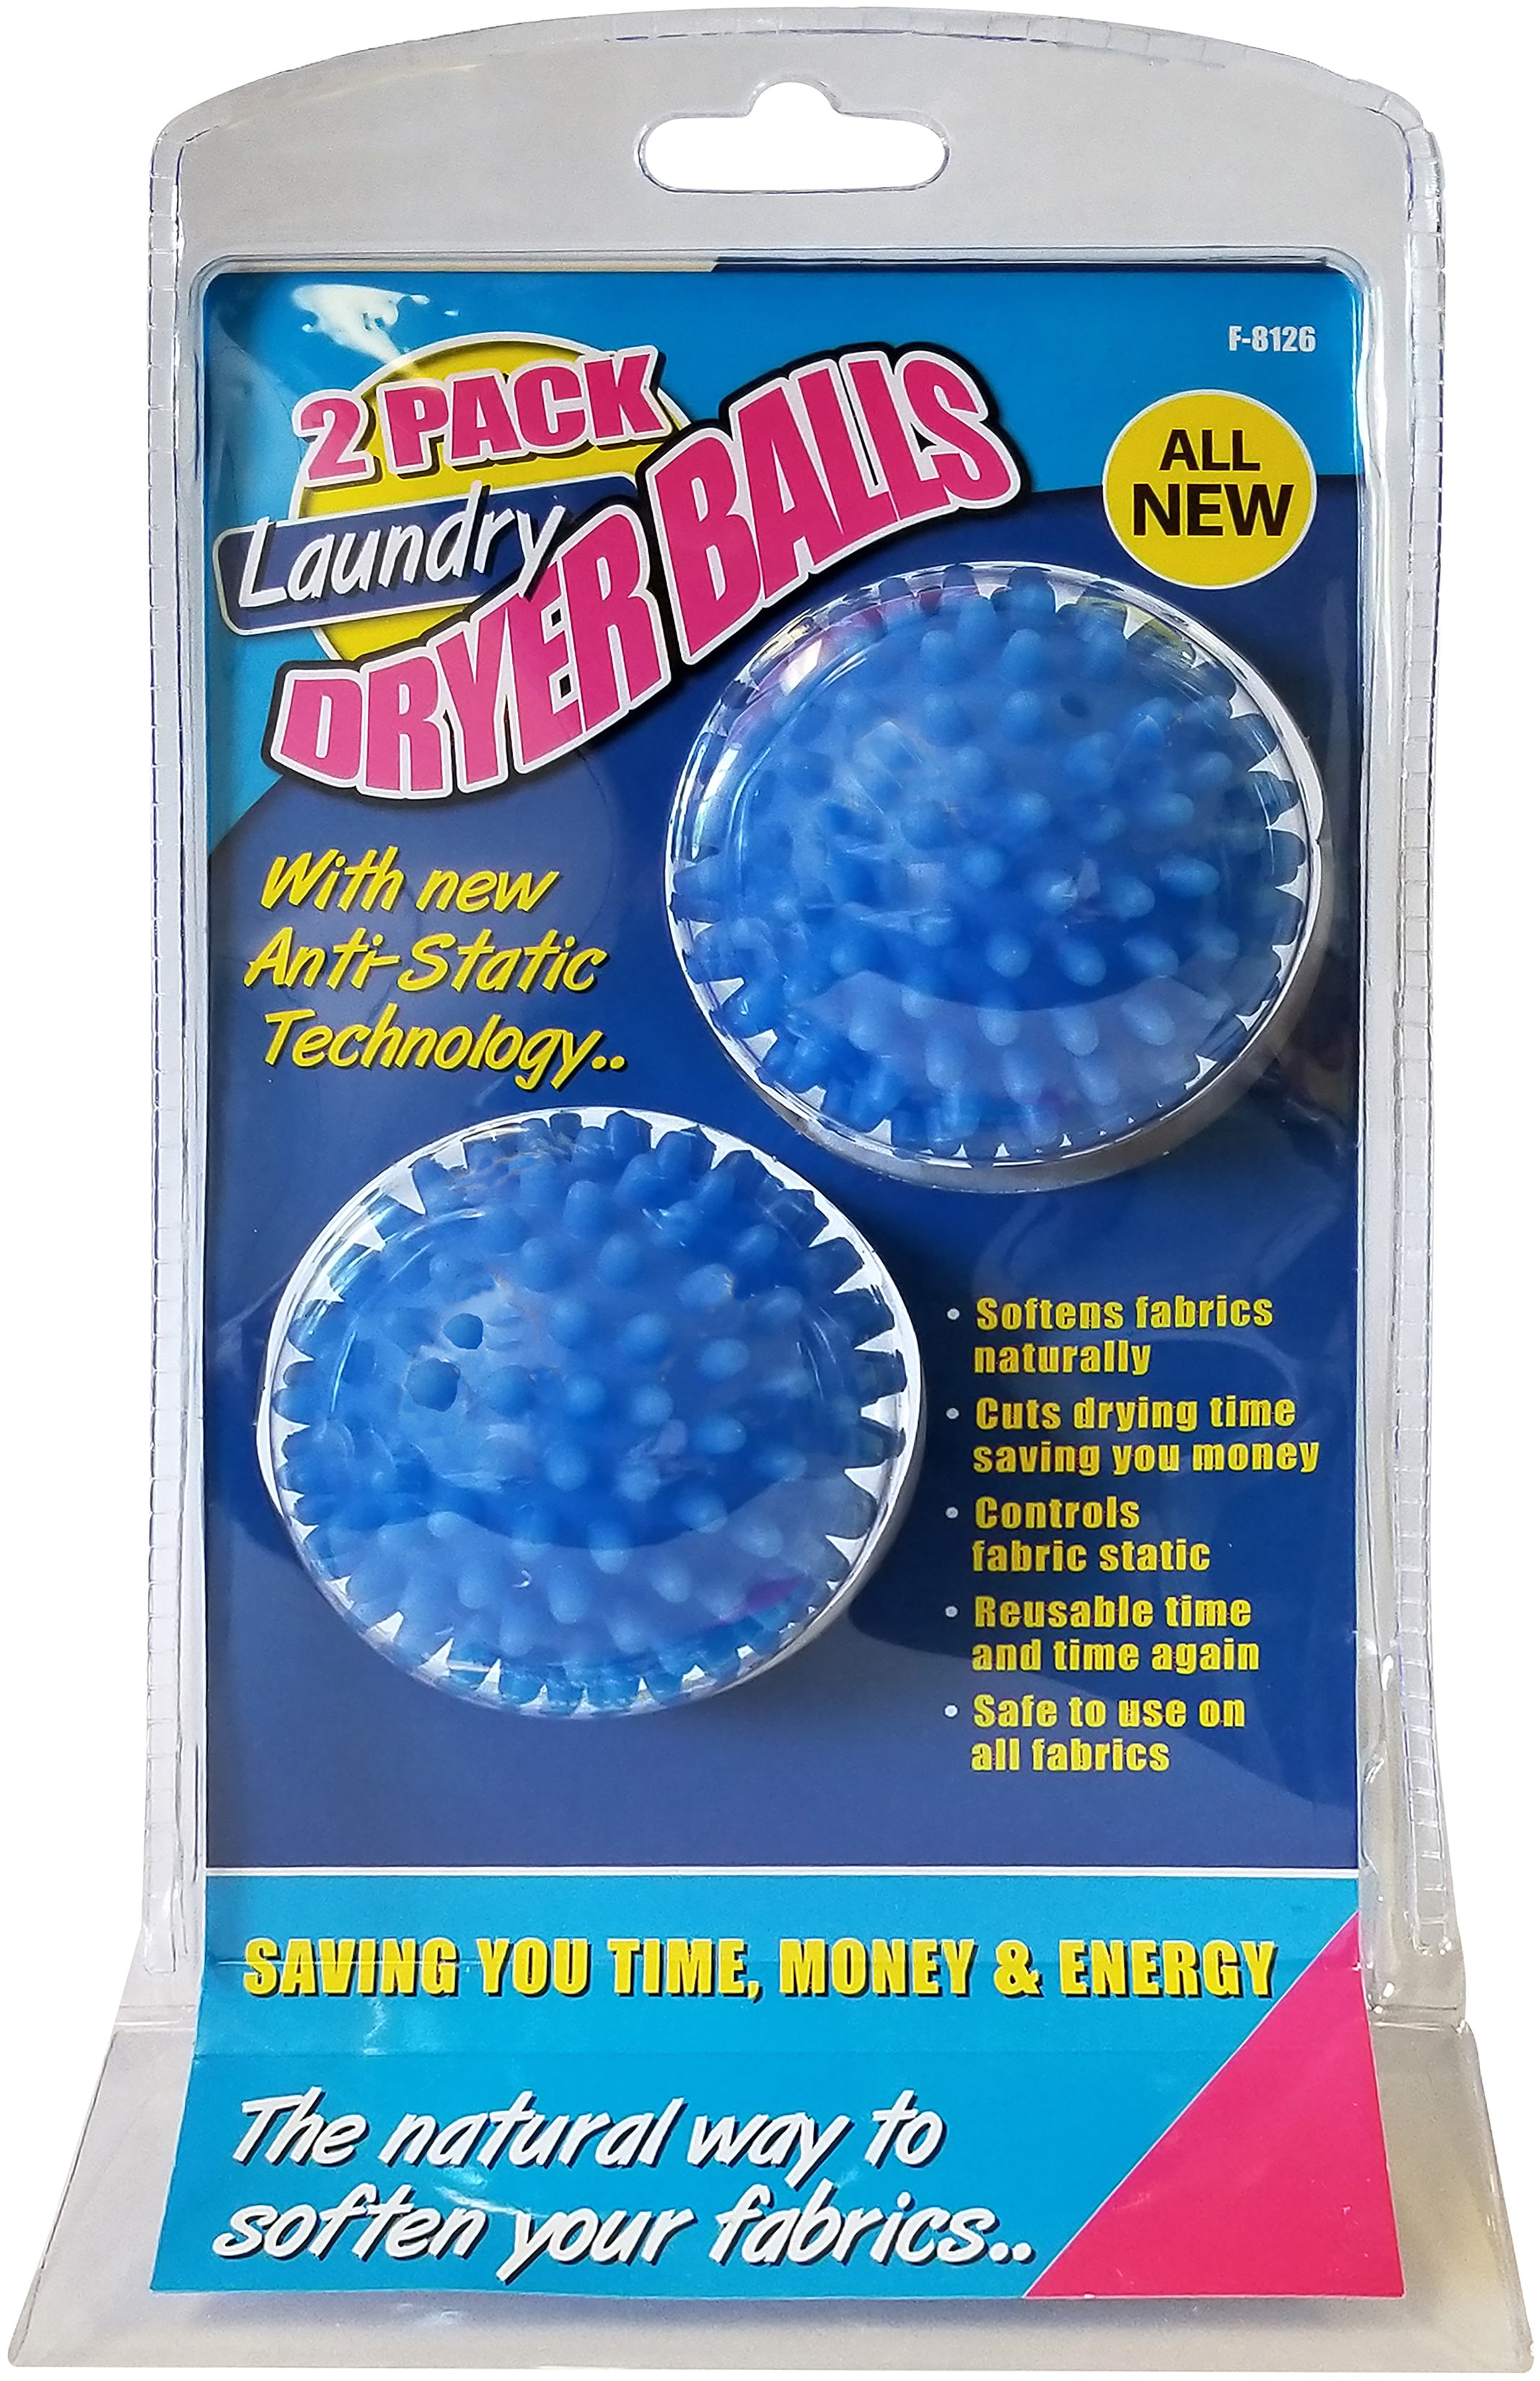 laundry static ball